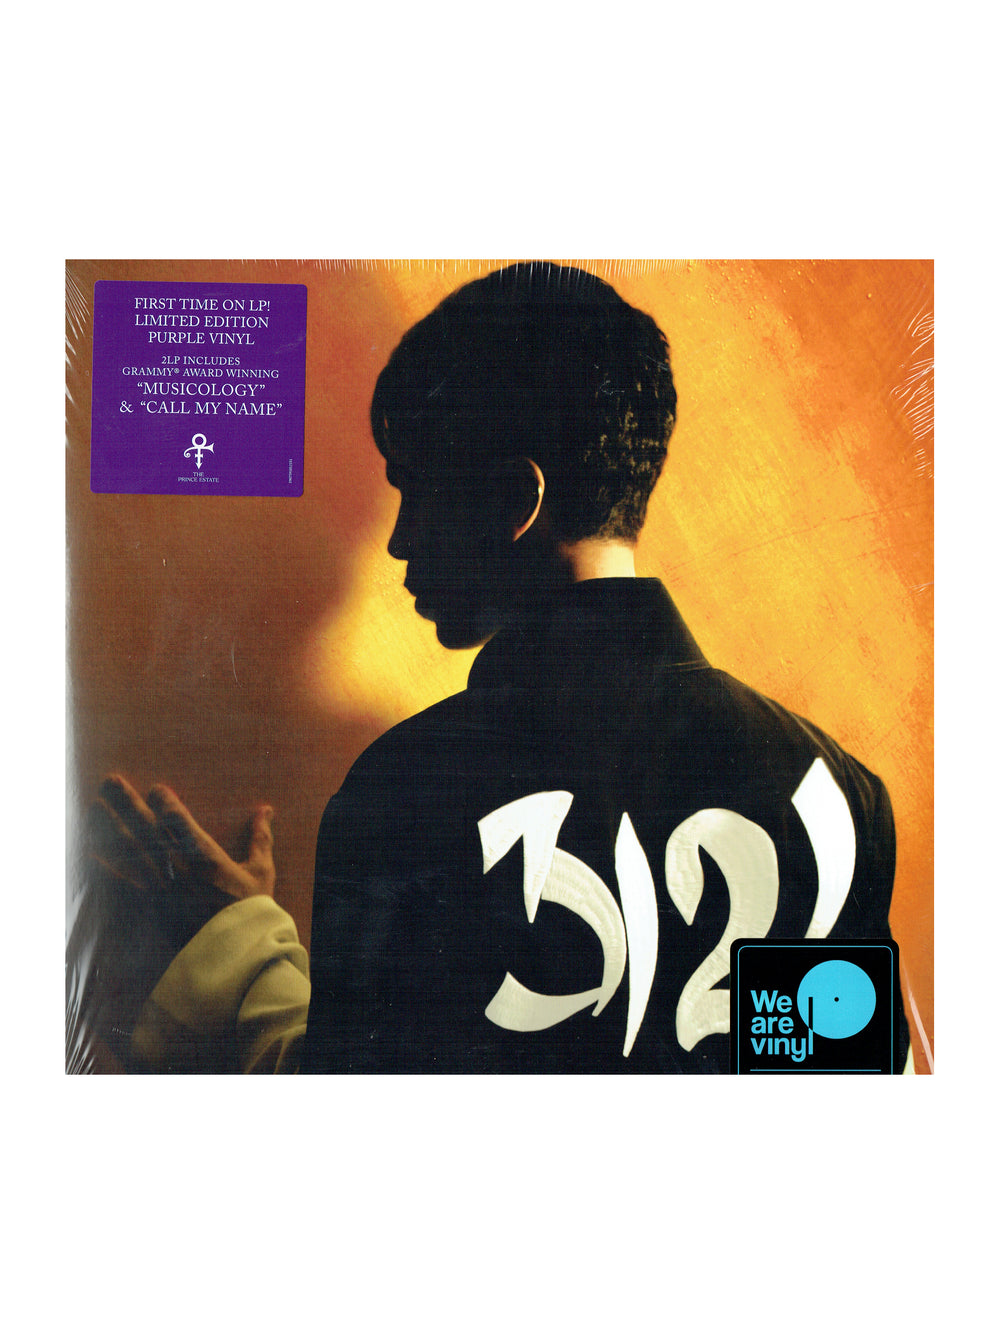 Prince – 3121 Vinyl LP x 2 RE Limited Edition Purple Vinyl Sony Legacy NEW:2019